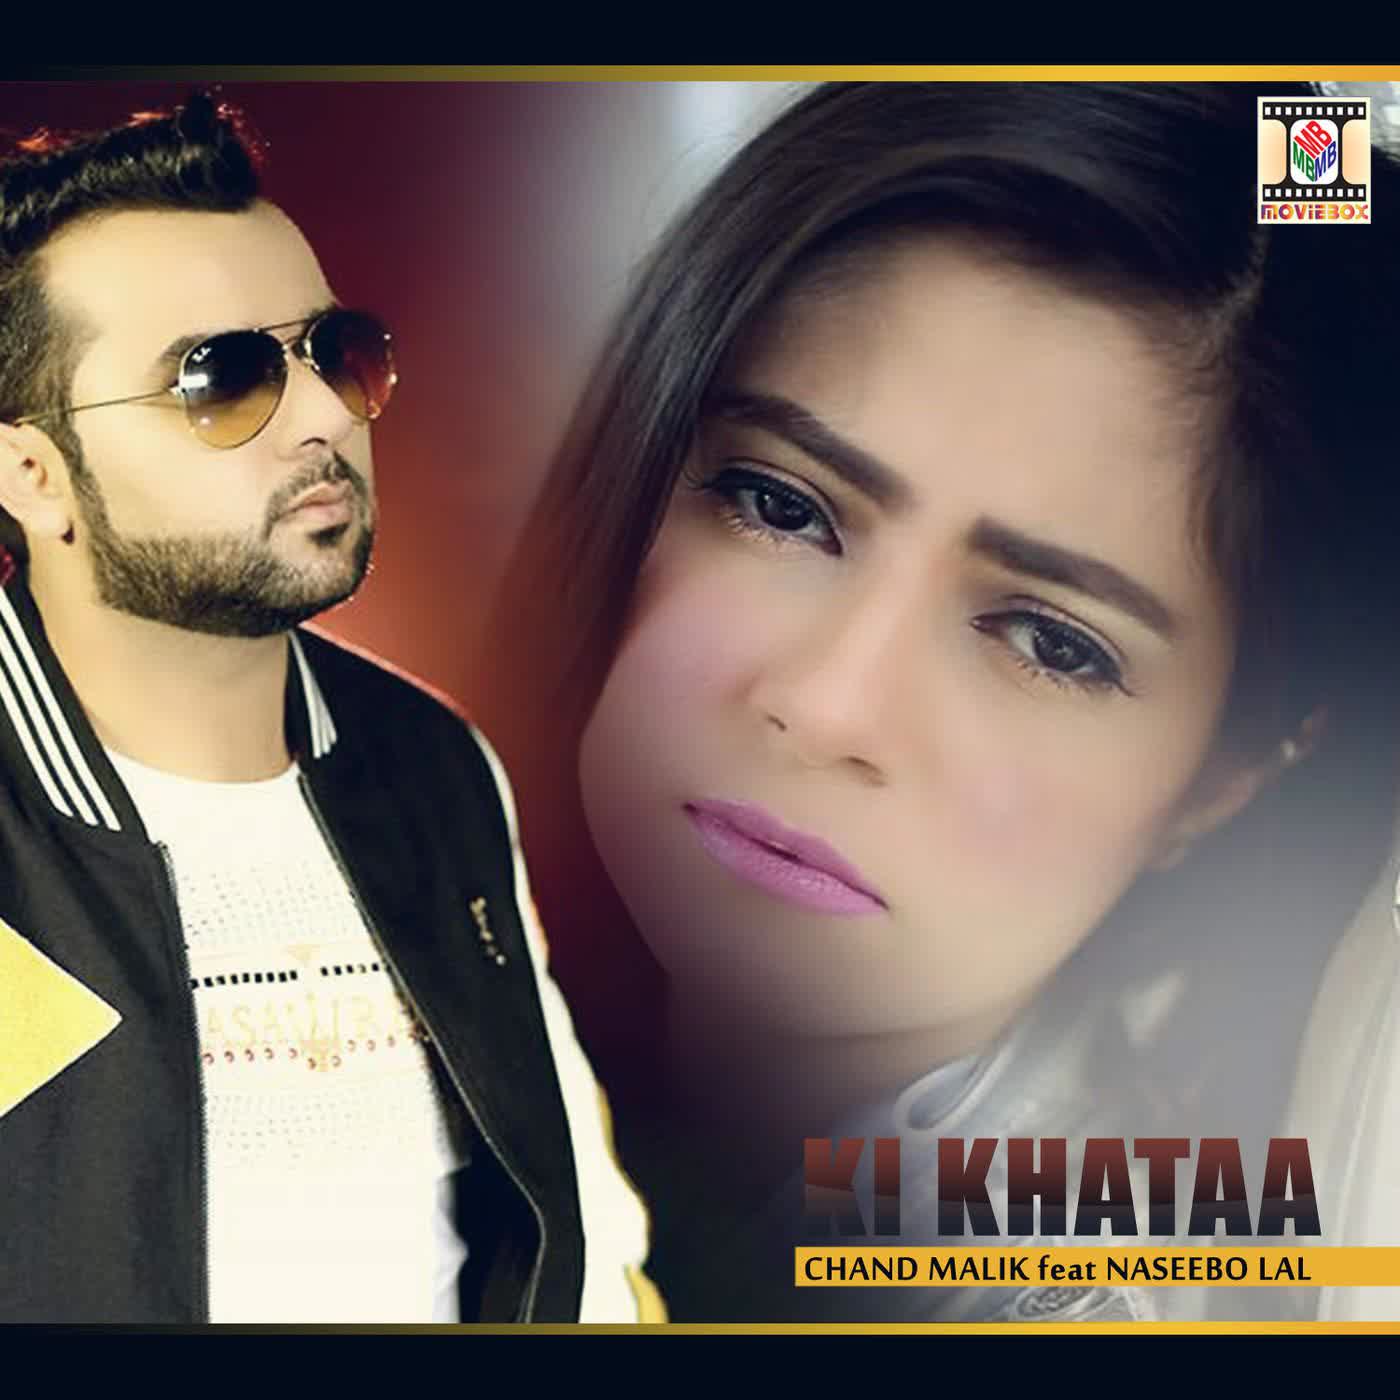 Ki Khataa Chand Malik  Mp3 song download